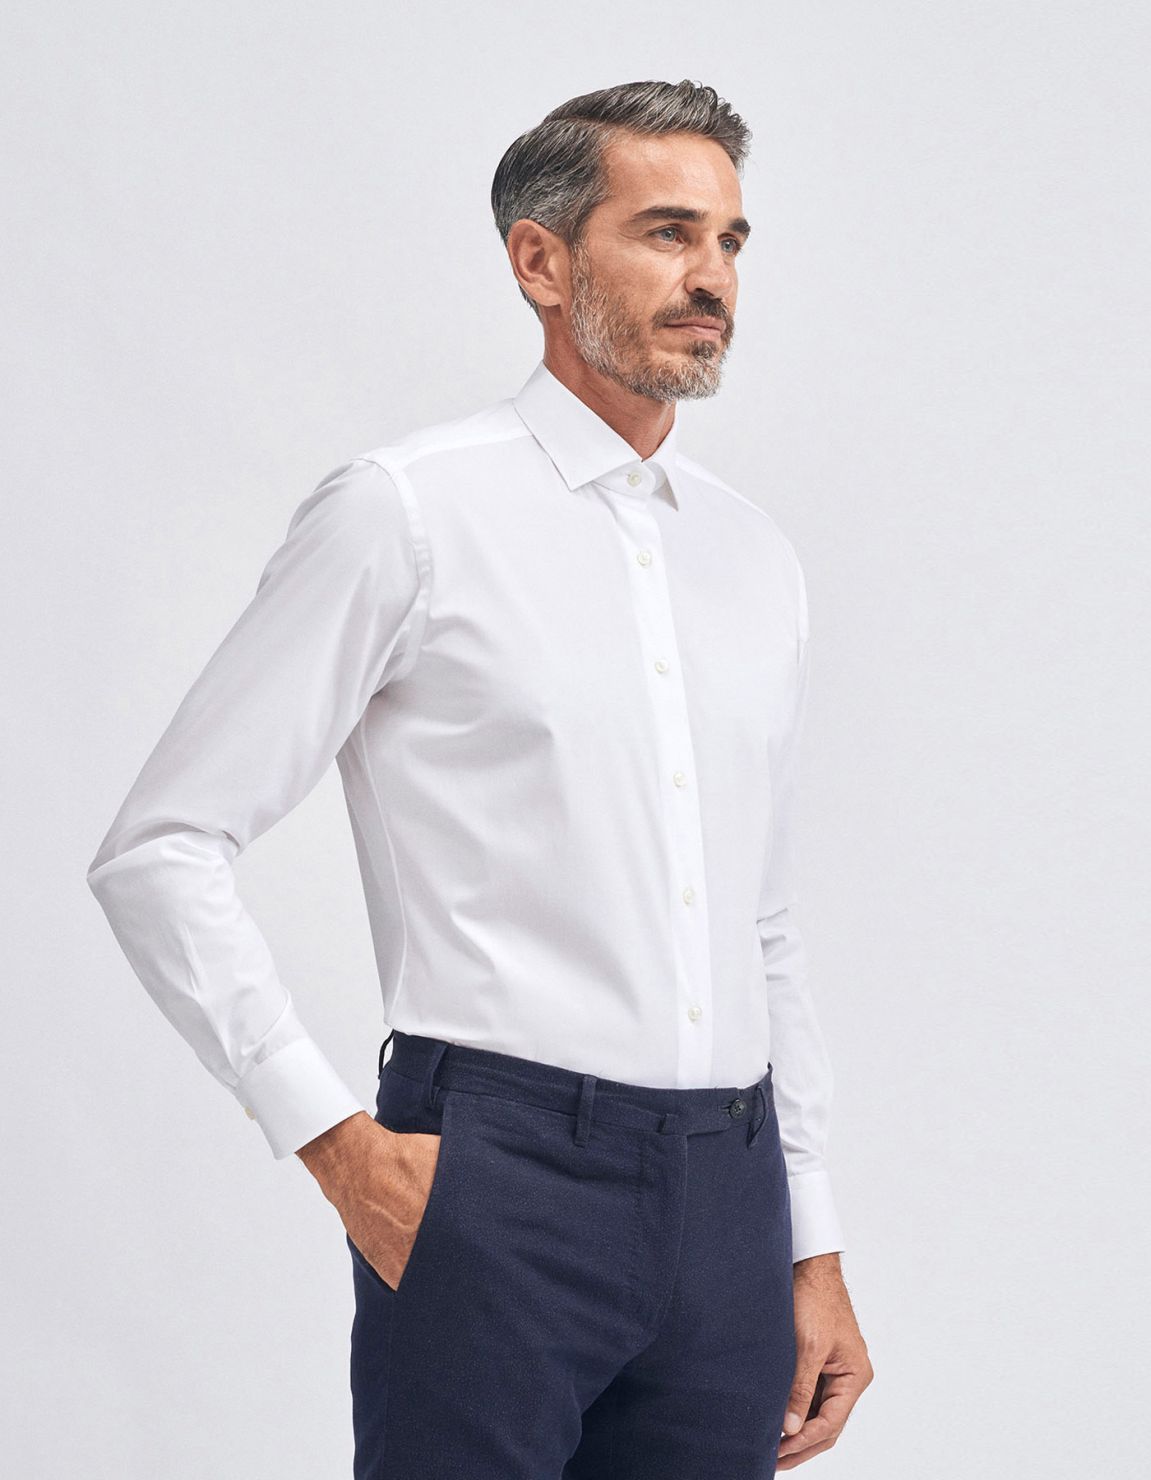 Shirt Collar small cutaway White Canvas Tailor Custom Fit 1